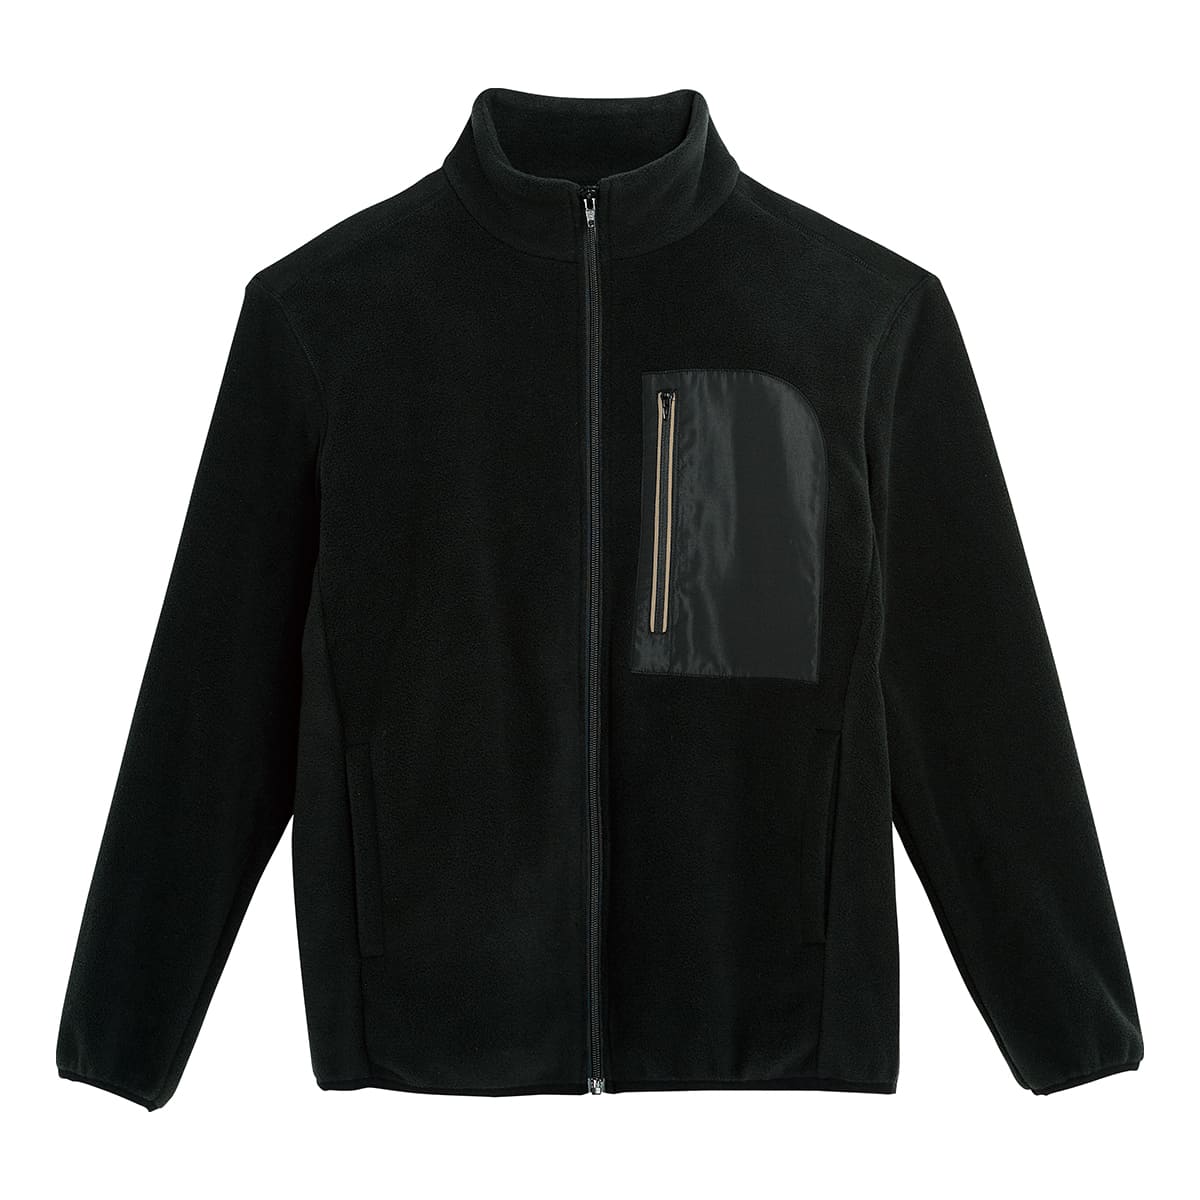 【Yoli】Fleece jacket フリースジャケット サイズ3 ブラック